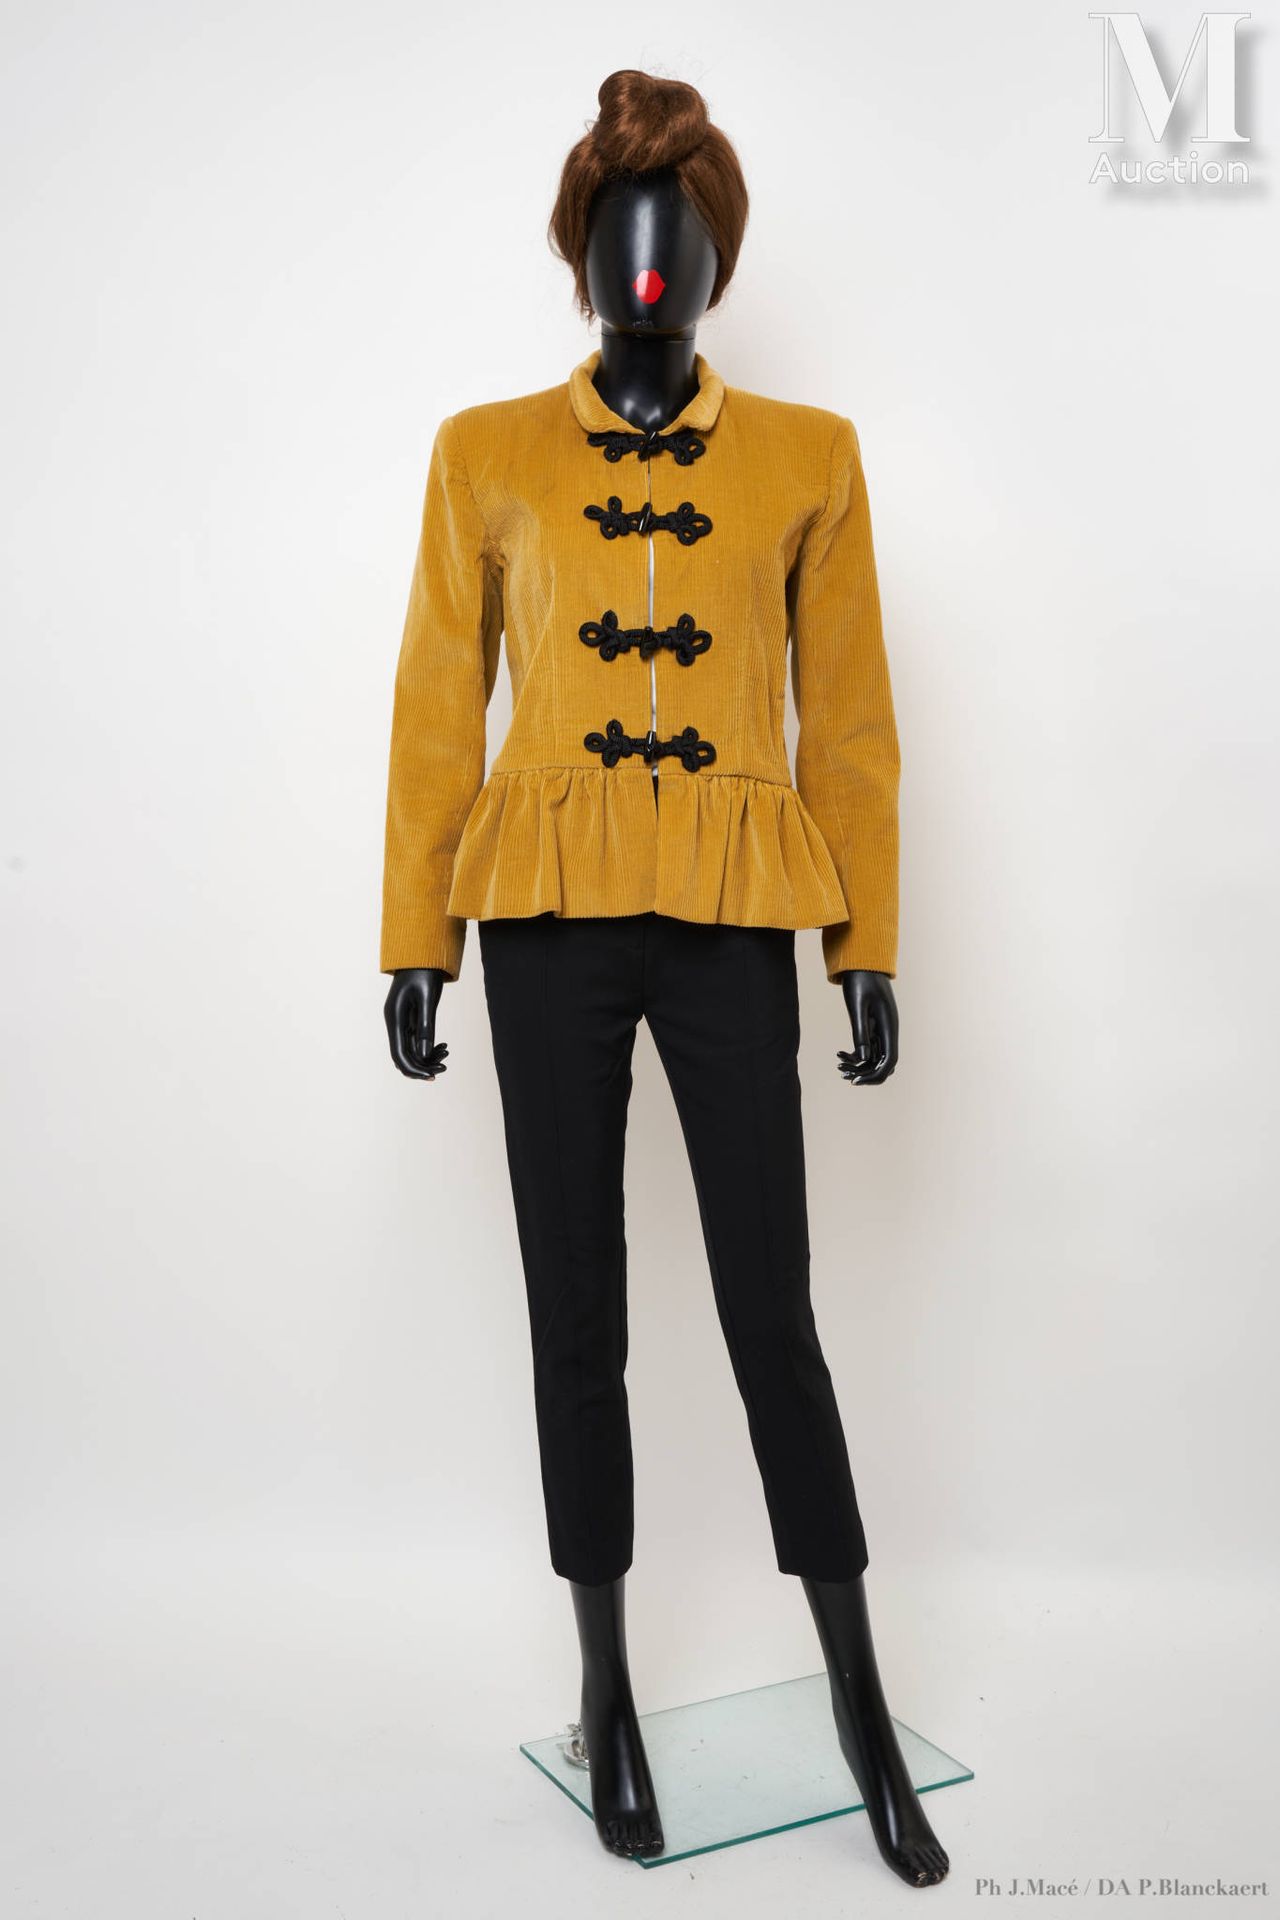 YVES SAINT LAURENT VARIATION - Hiver 1991 Ruffled jacket
in mustard corduroy, bl&hellip;